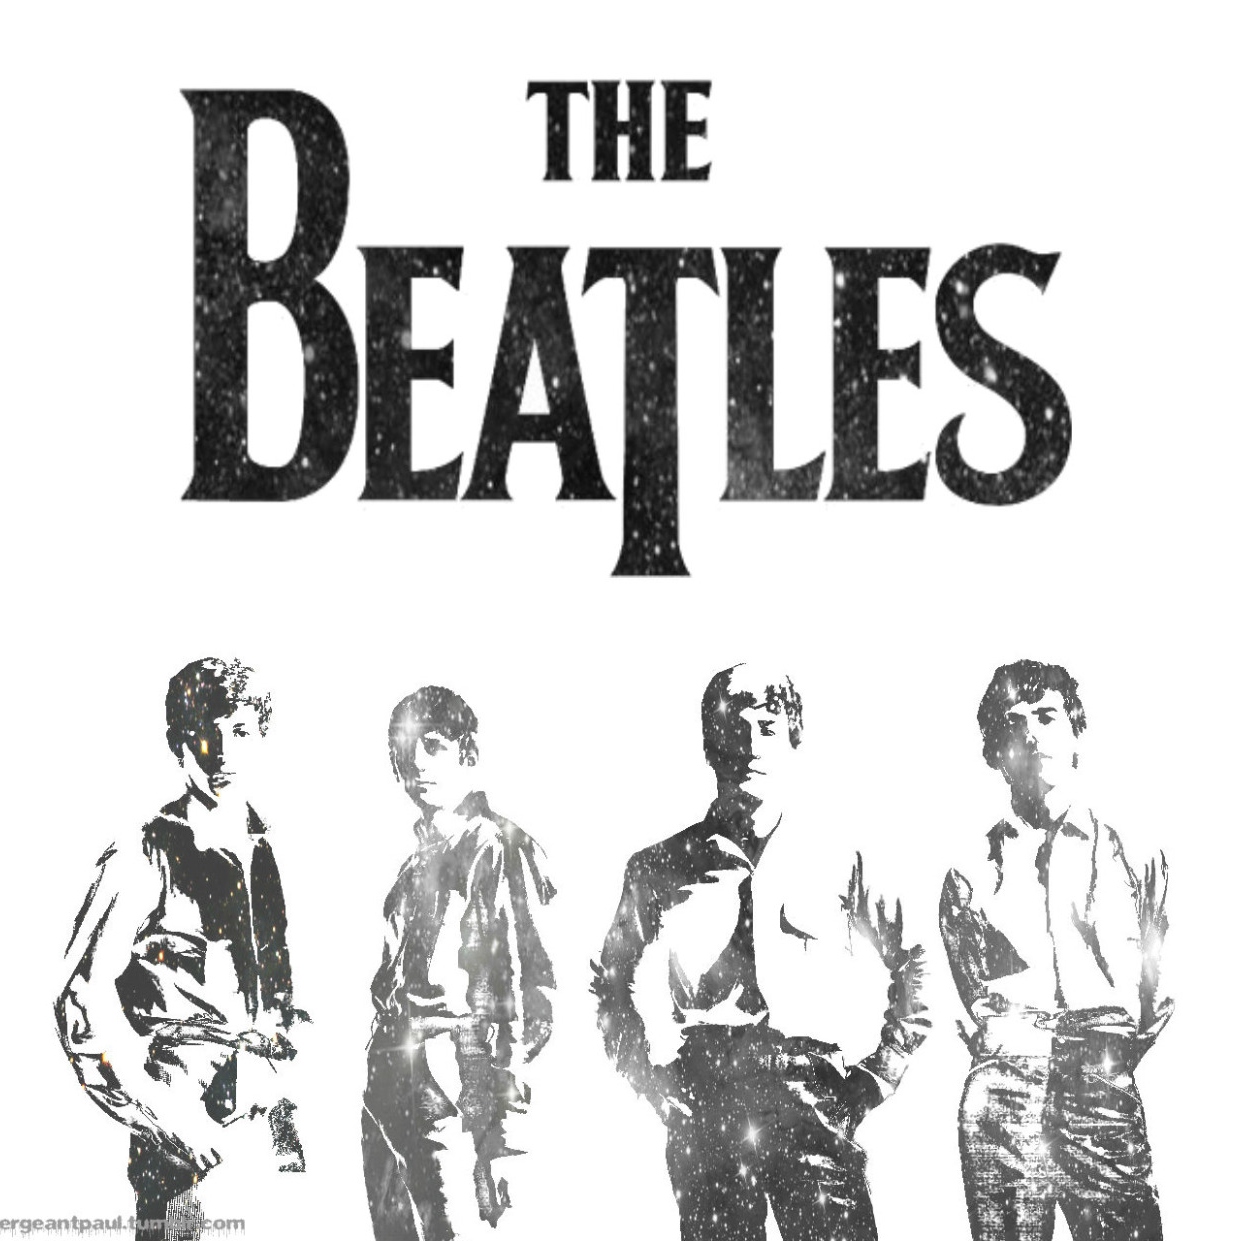 Cover beatles. Постер Beatles. Beatles обложка. Группа the Beatles обложка. Битлз обложки альбомов.